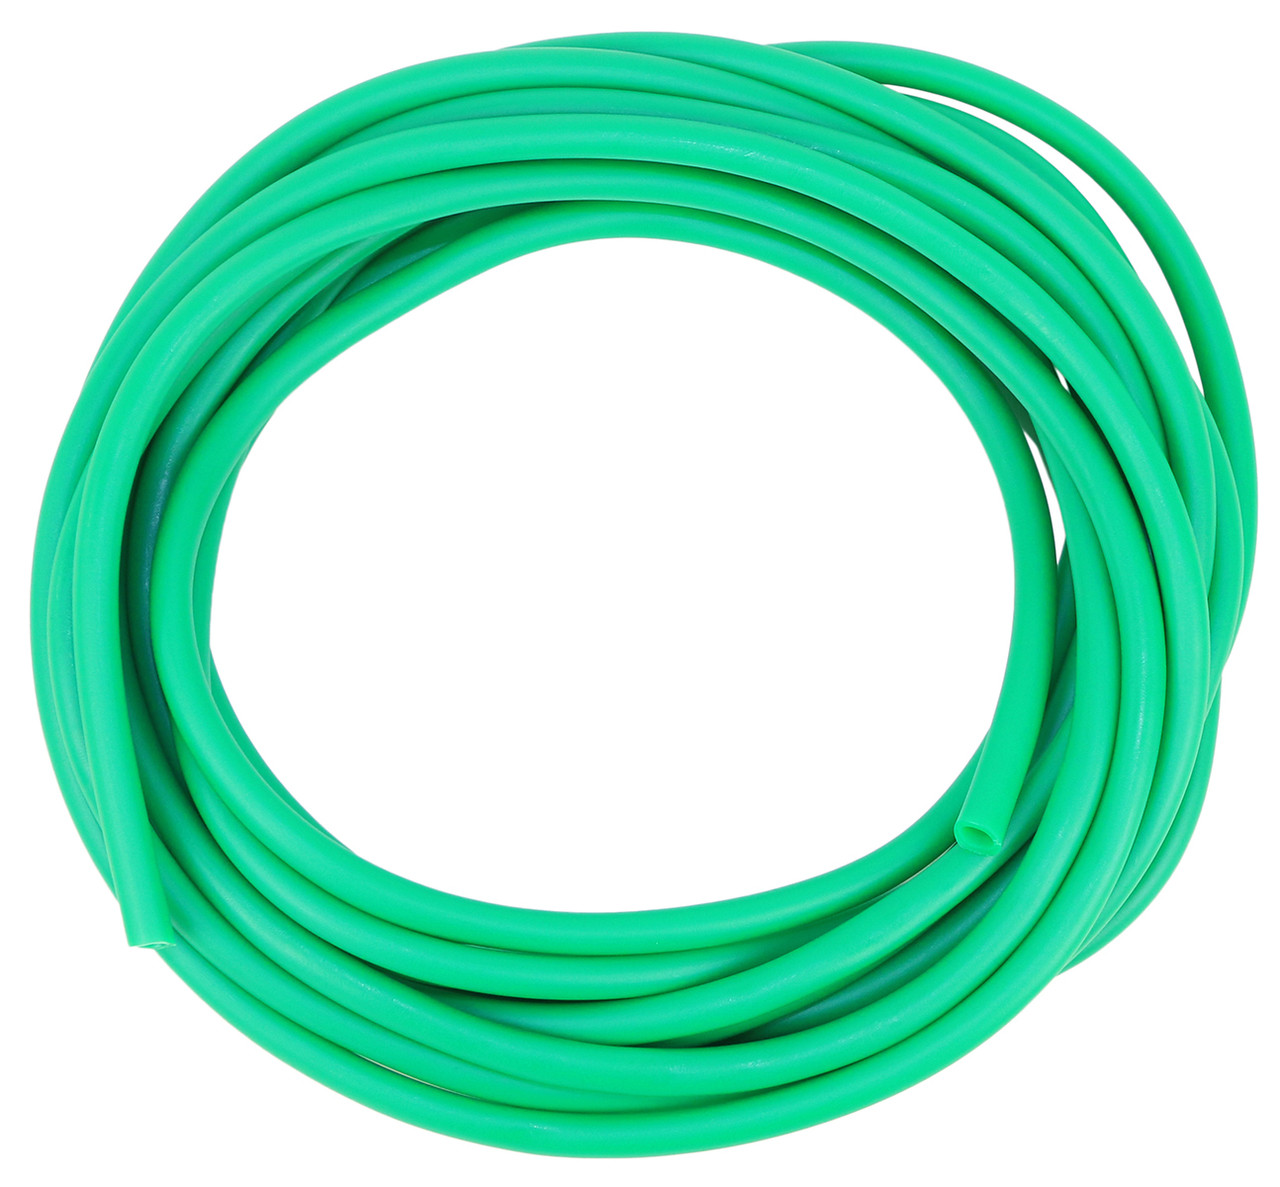 CanDo¨ Latex Free Exercise Tubing - 25' roll - Green - medium